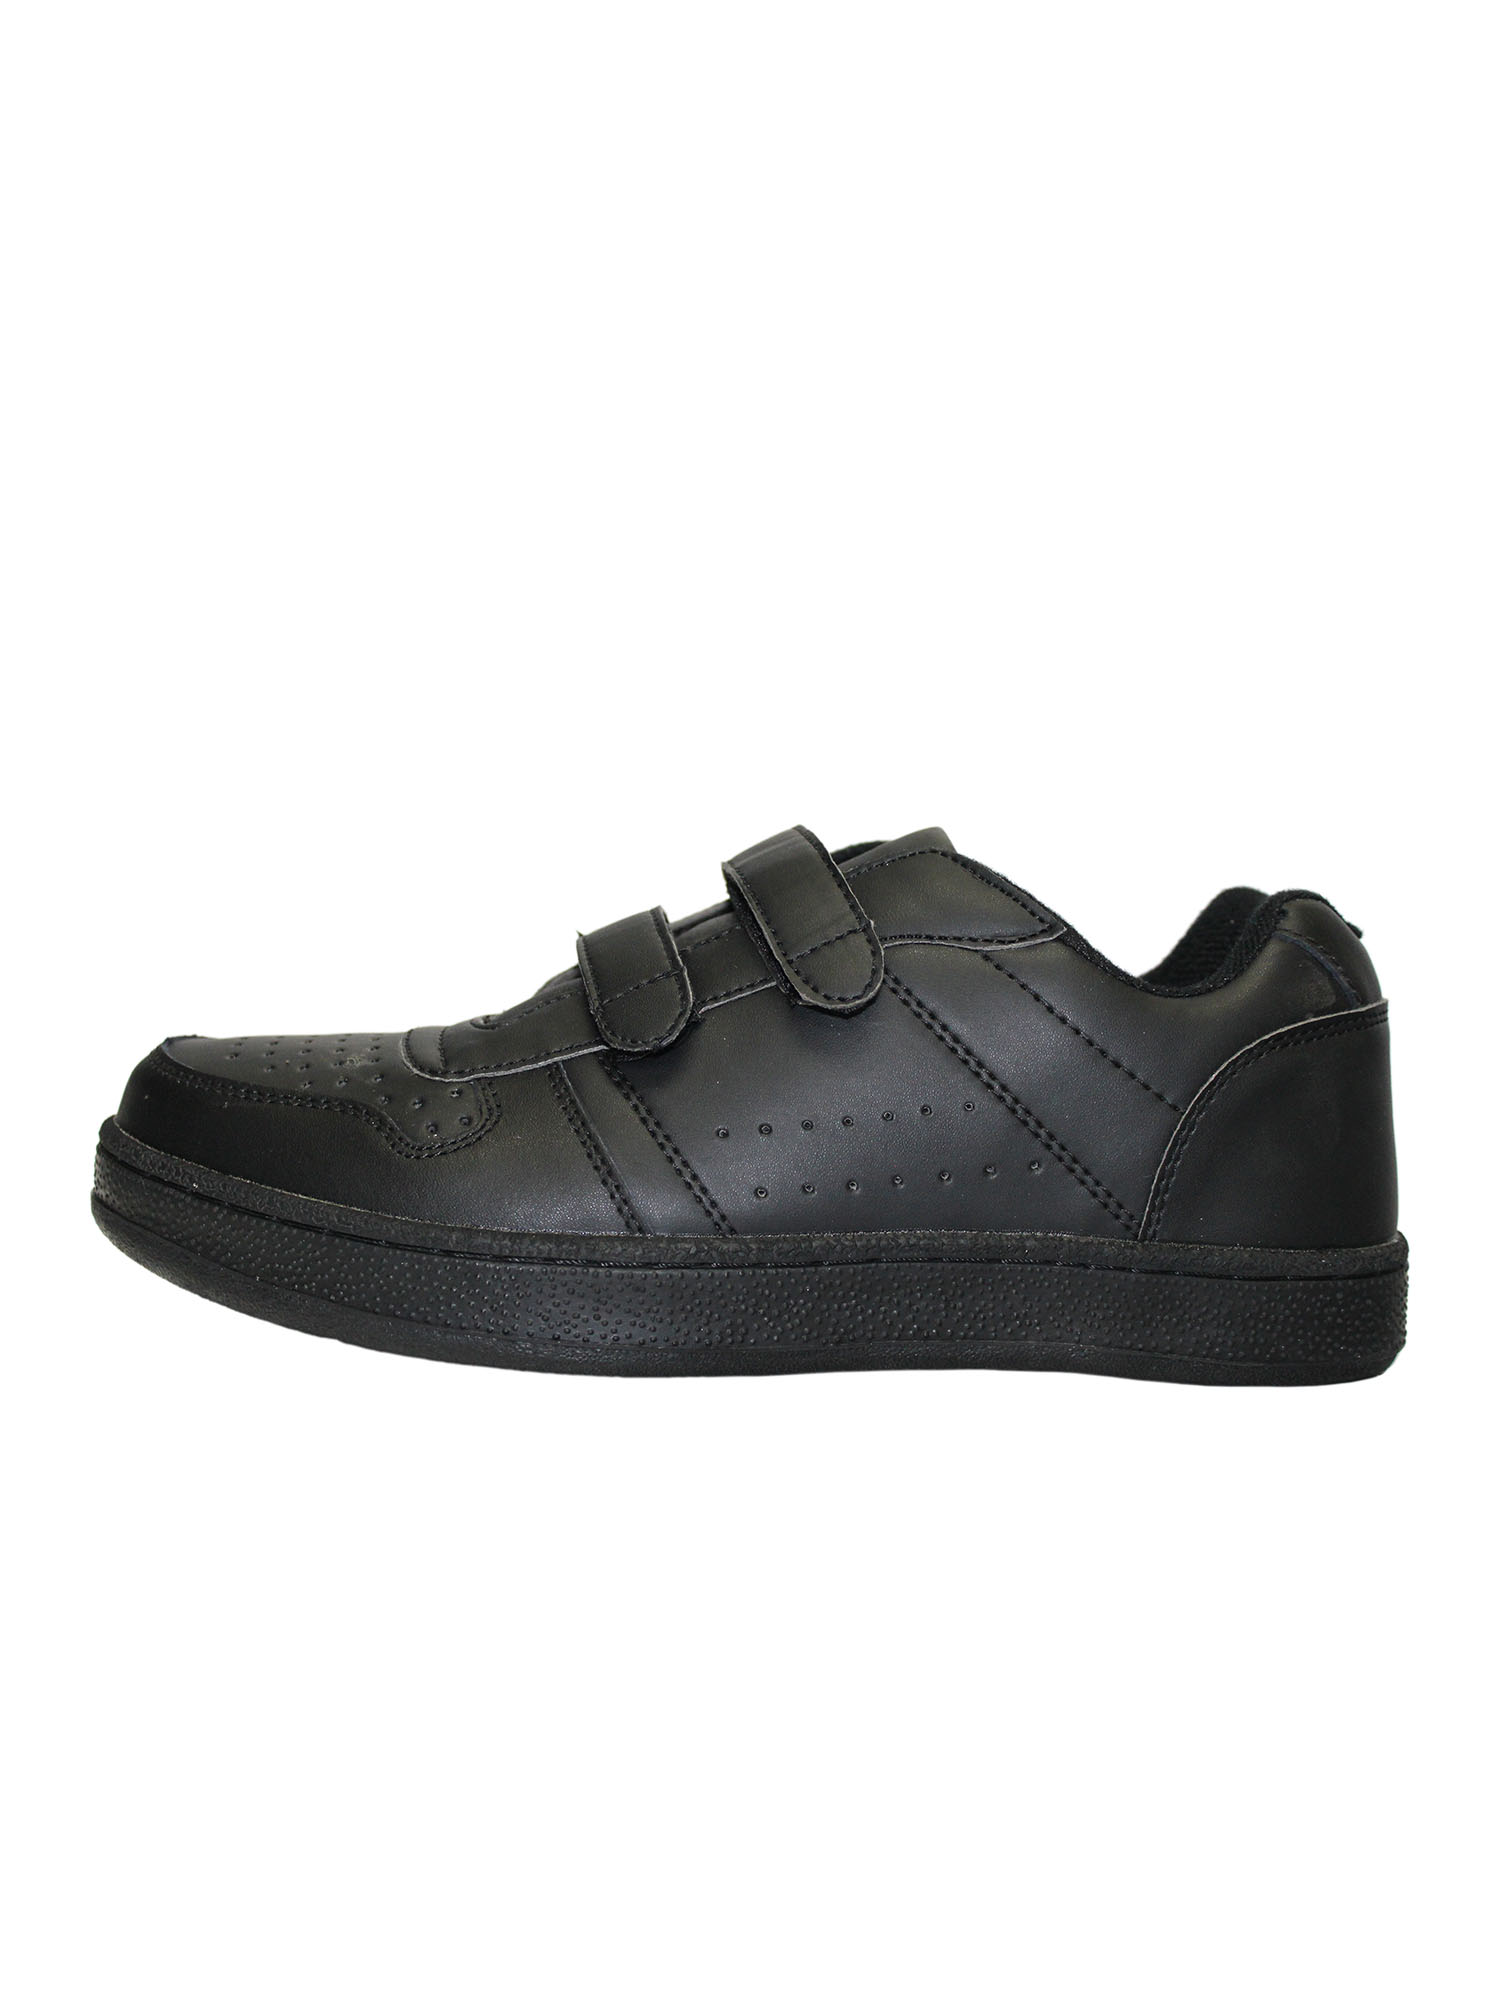 Tanleewa Men's Leather Strap Sneakers Lightweight Hook and Loop Walking Shoe Size 9.5 Adult Male - image 2 of 4